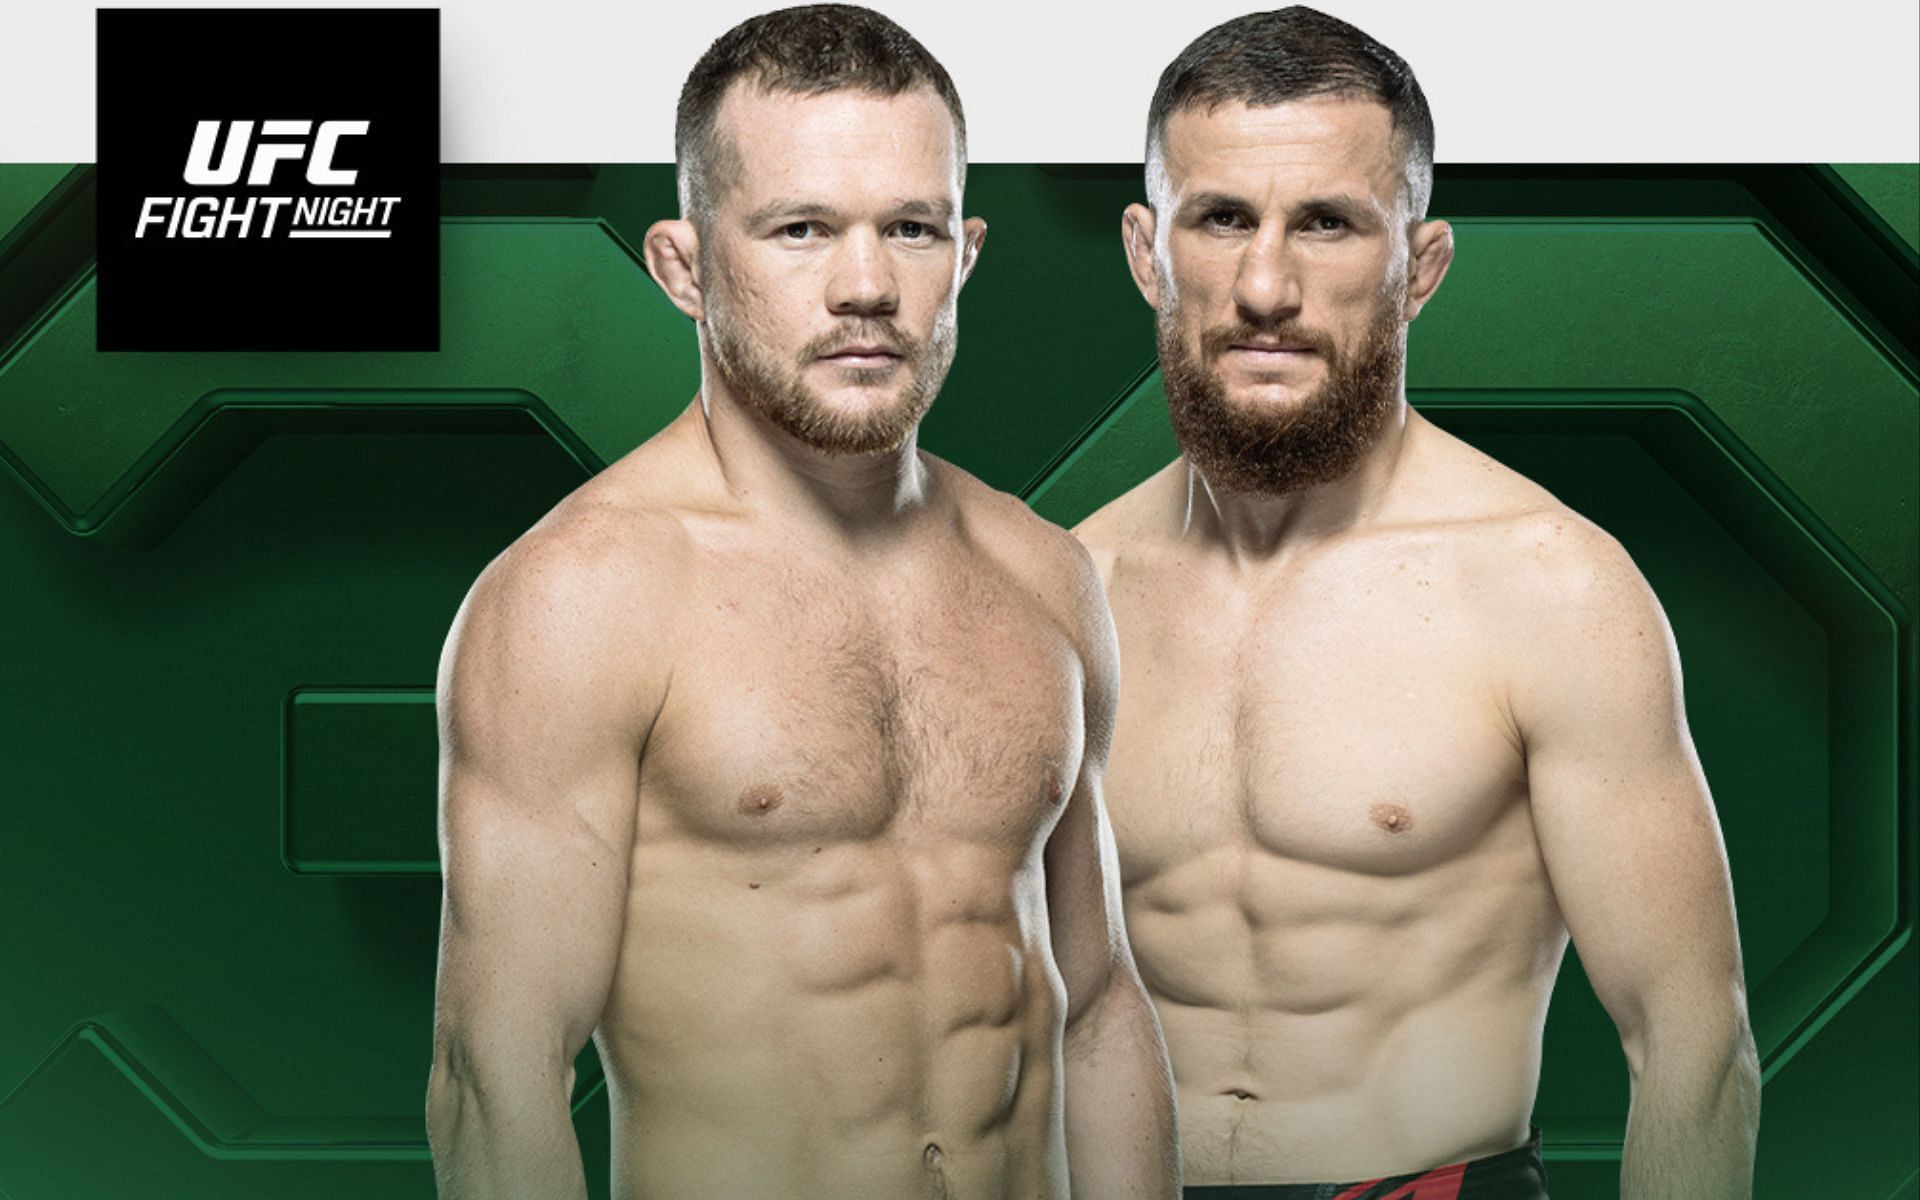 Petr Yan vs. Merab Dvalishvili poster [Image courtesy: @UFC on Twitter]